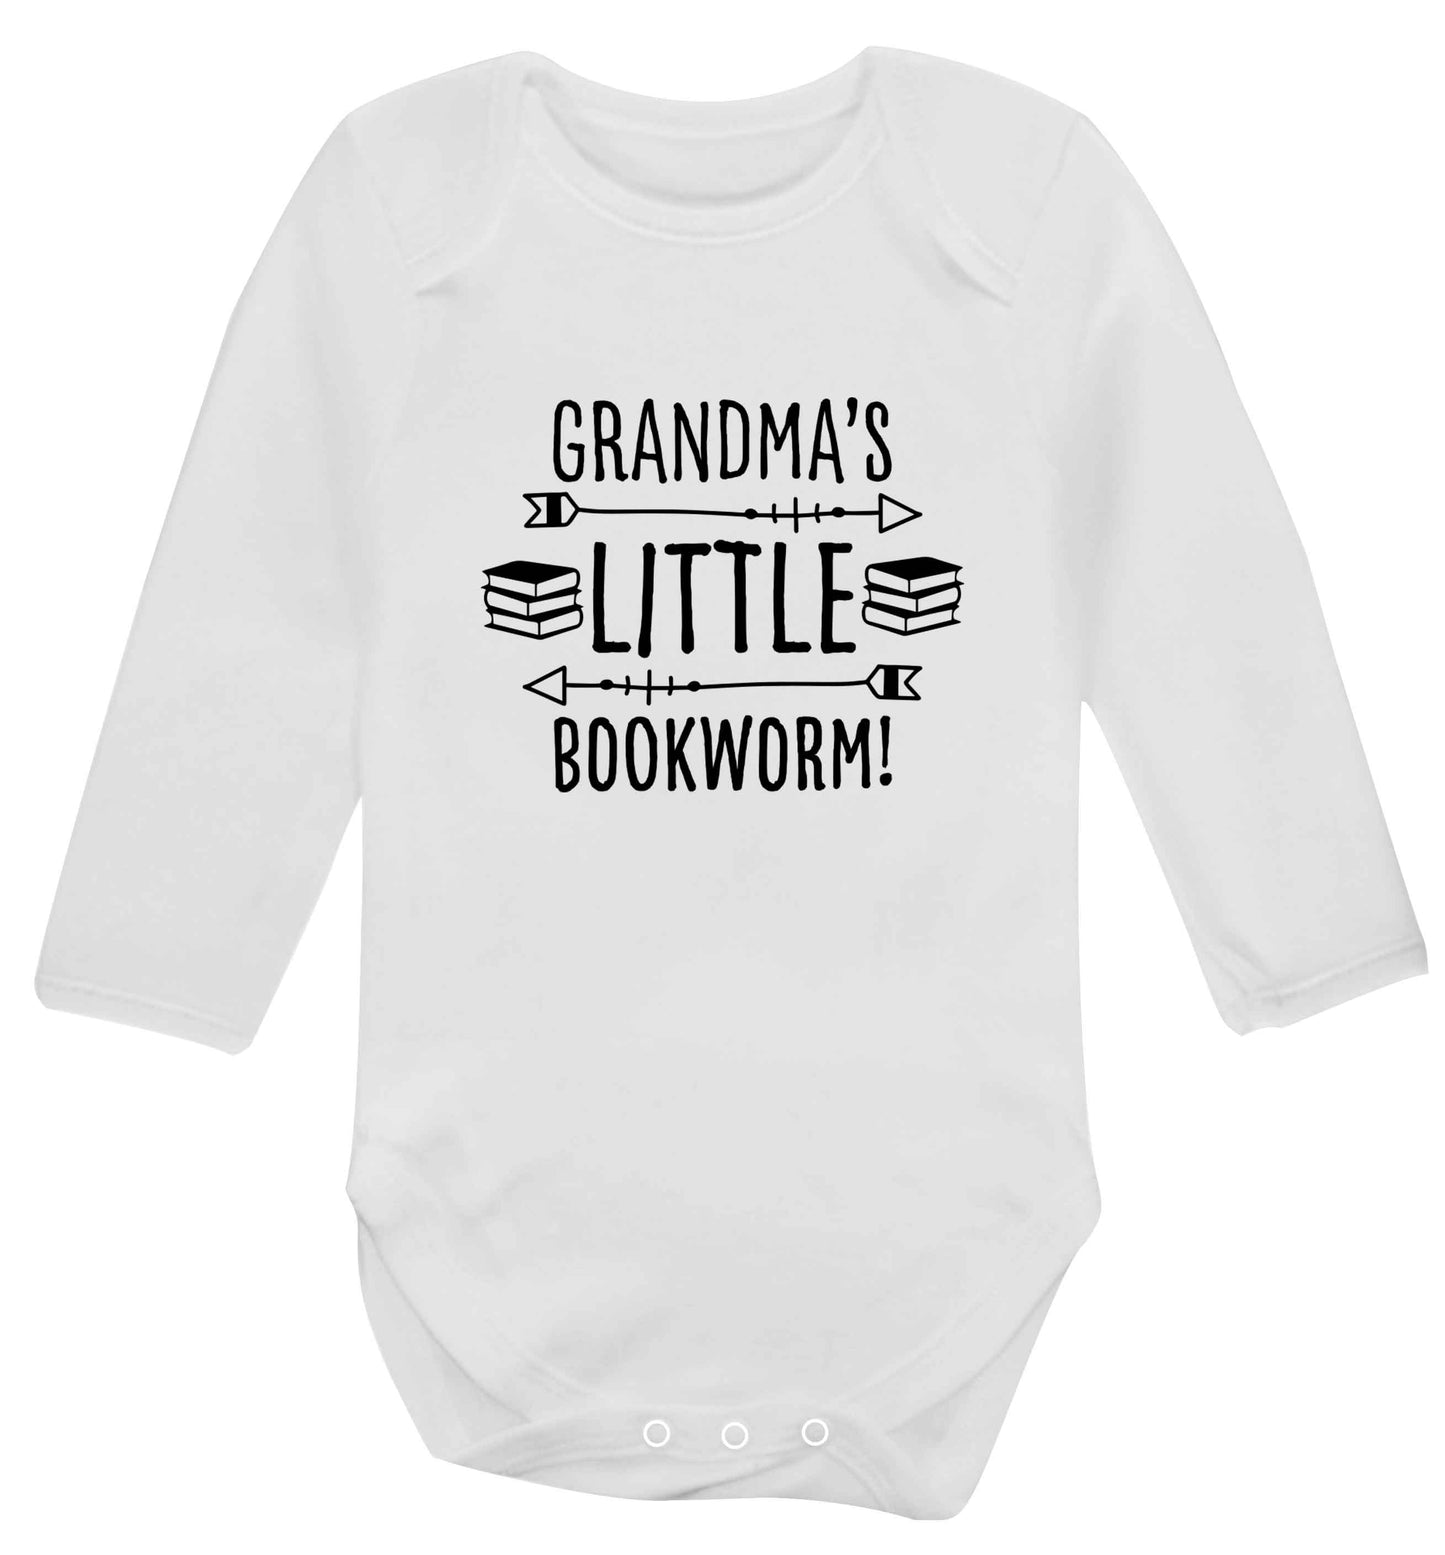 Grandma's little bookworm baby vest long sleeved white 6-12 months